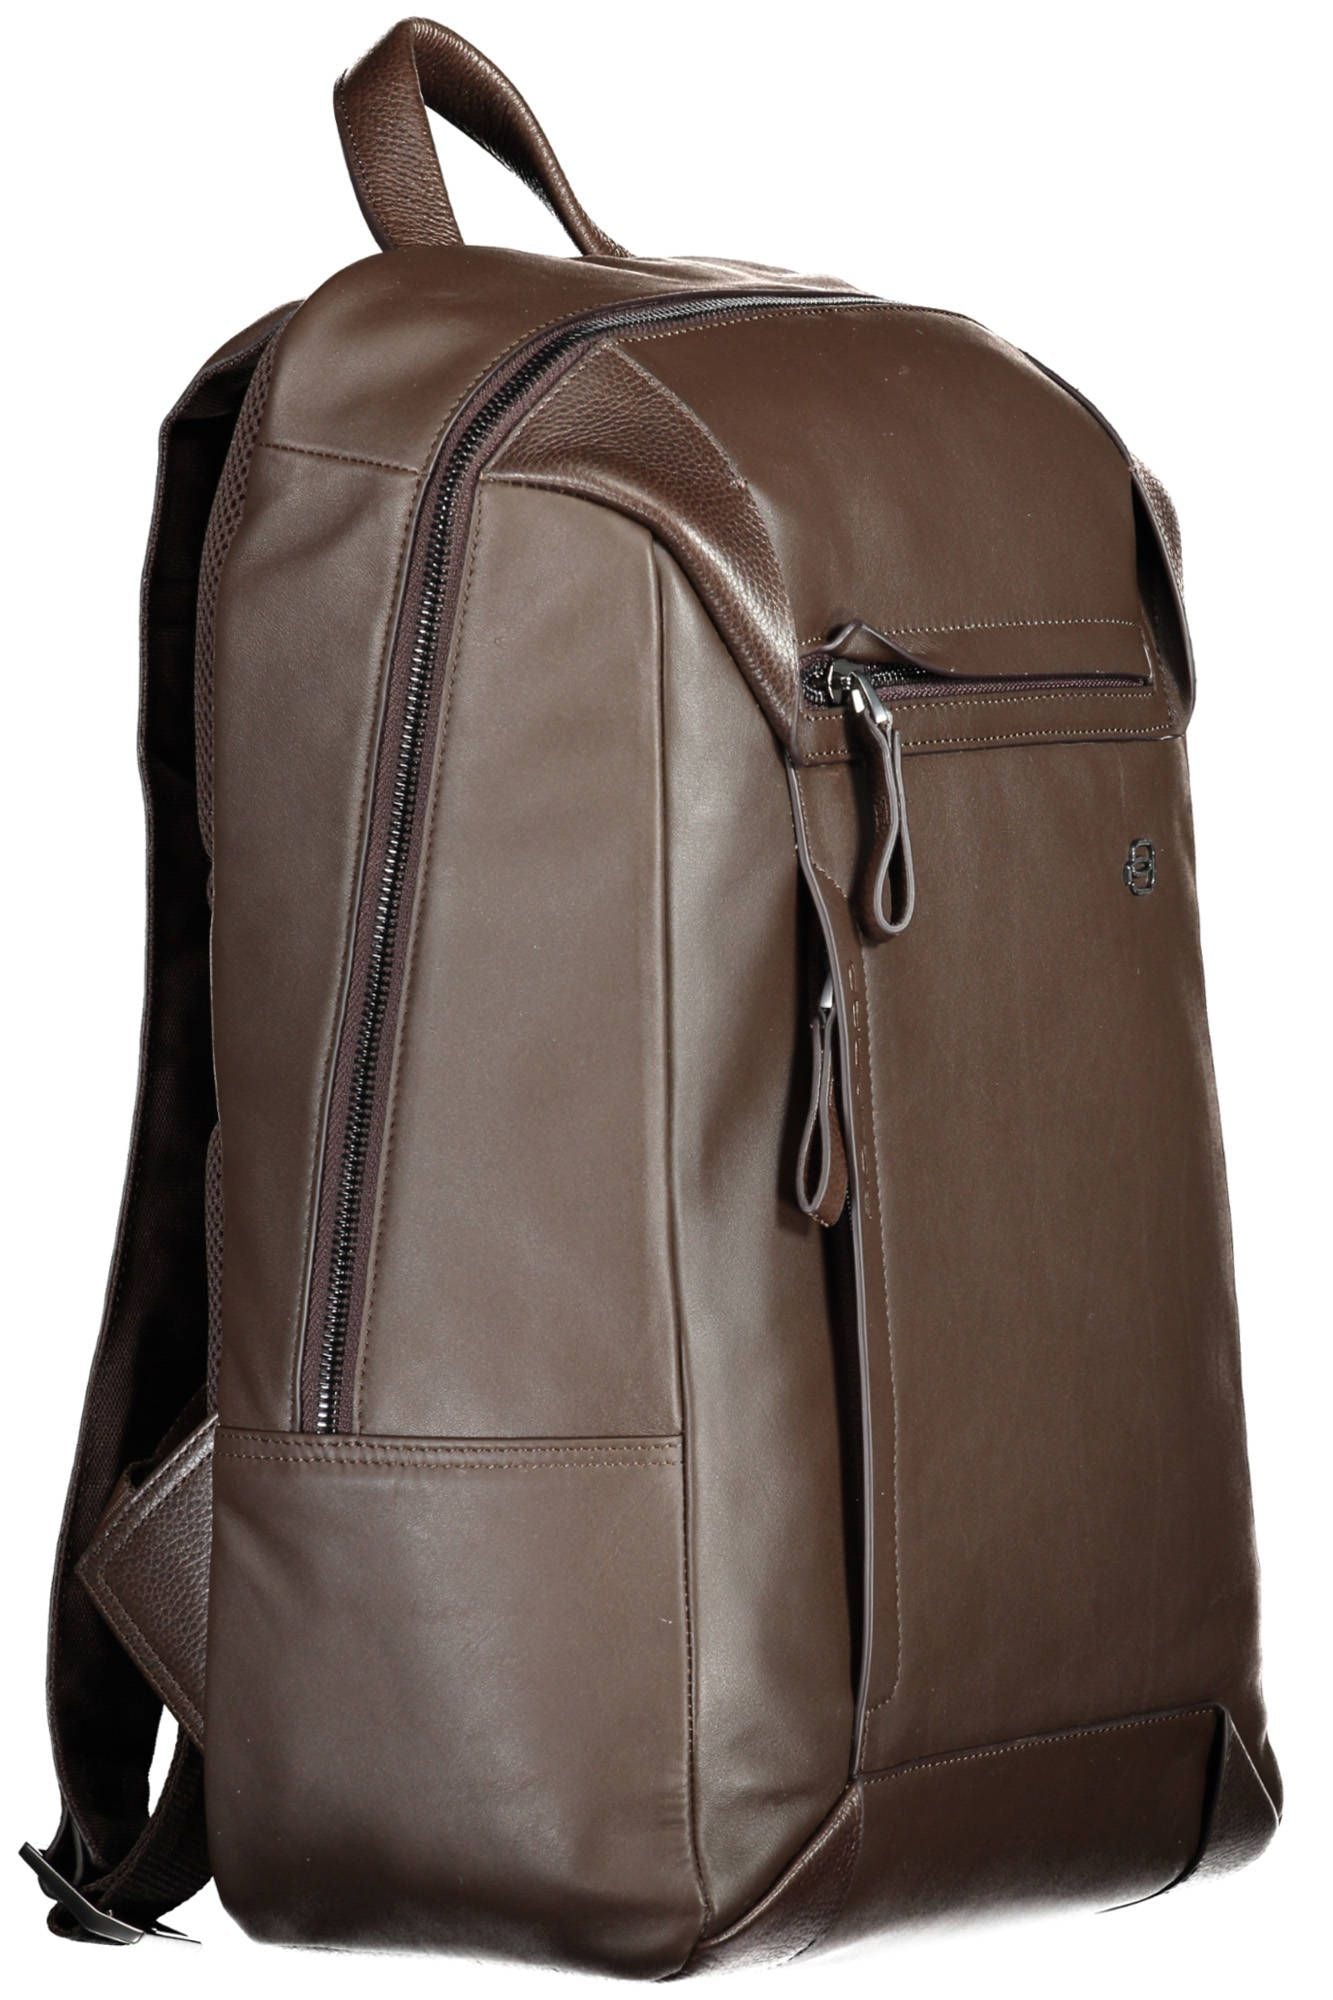 Elegant Leather Backpack with Contrast Details